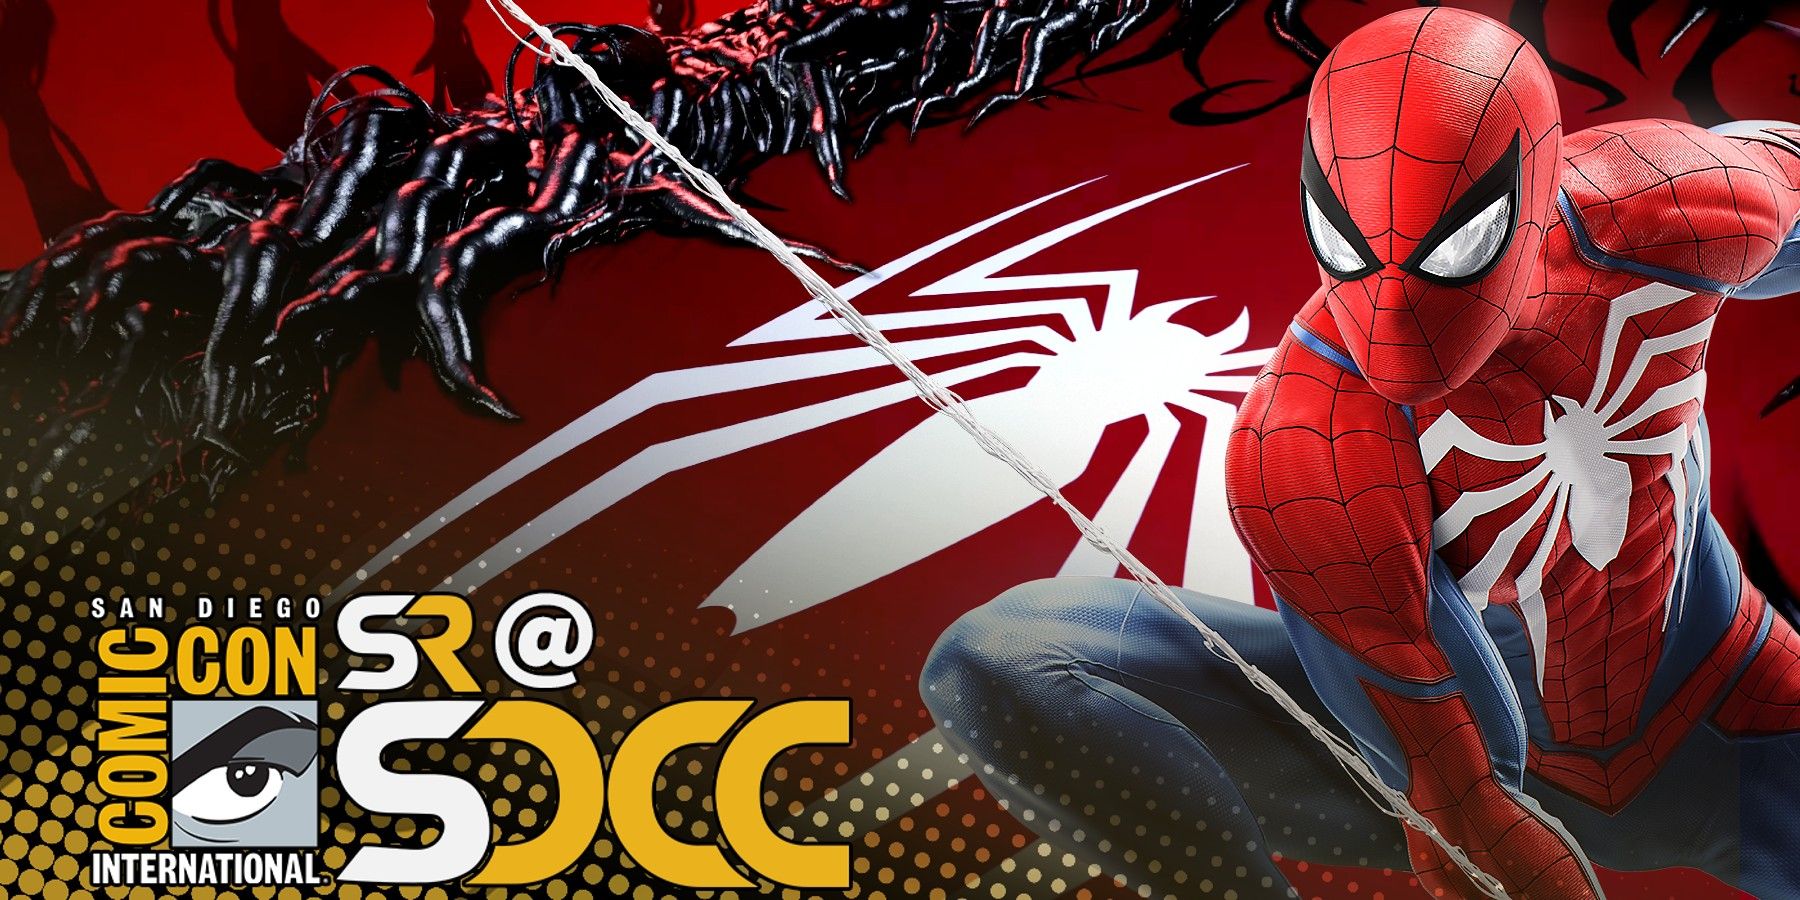 Marvel's Spider-Man 2 & Wolverine Dominate PlayStation